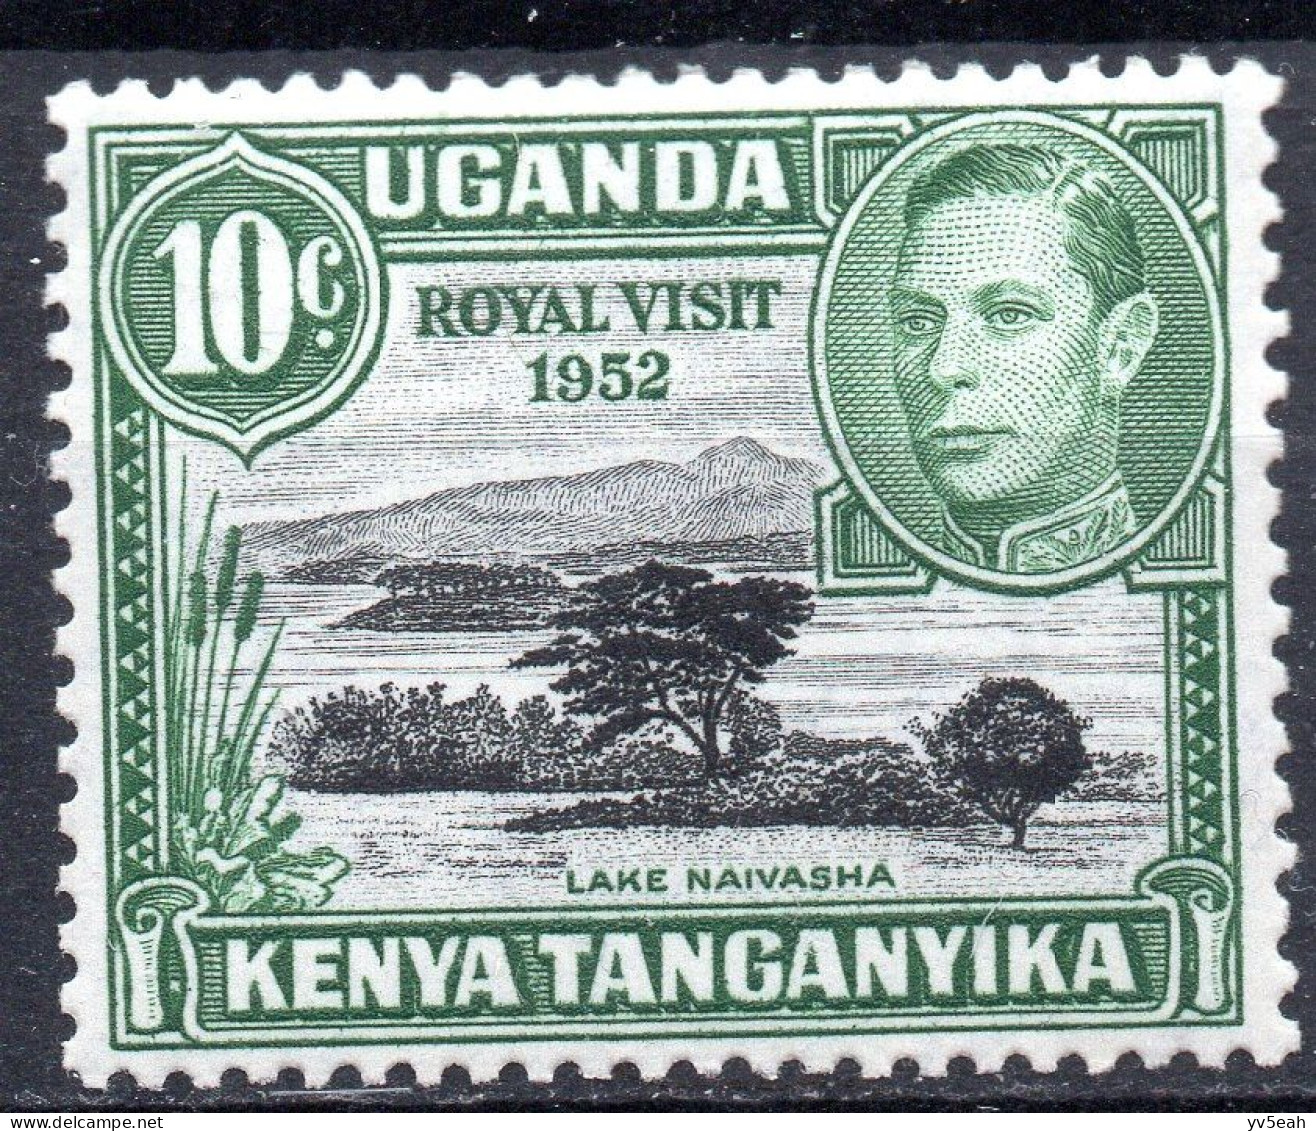 KENYA UGANDA & TANZANIA/1941-2/MH/SC#98/ROYAL VISIT OF PRINCESS ELIZABETH & DUTCHNESS OF EDINBURGH / 10c GREEN & BLK - Kenya, Uganda & Tanzania